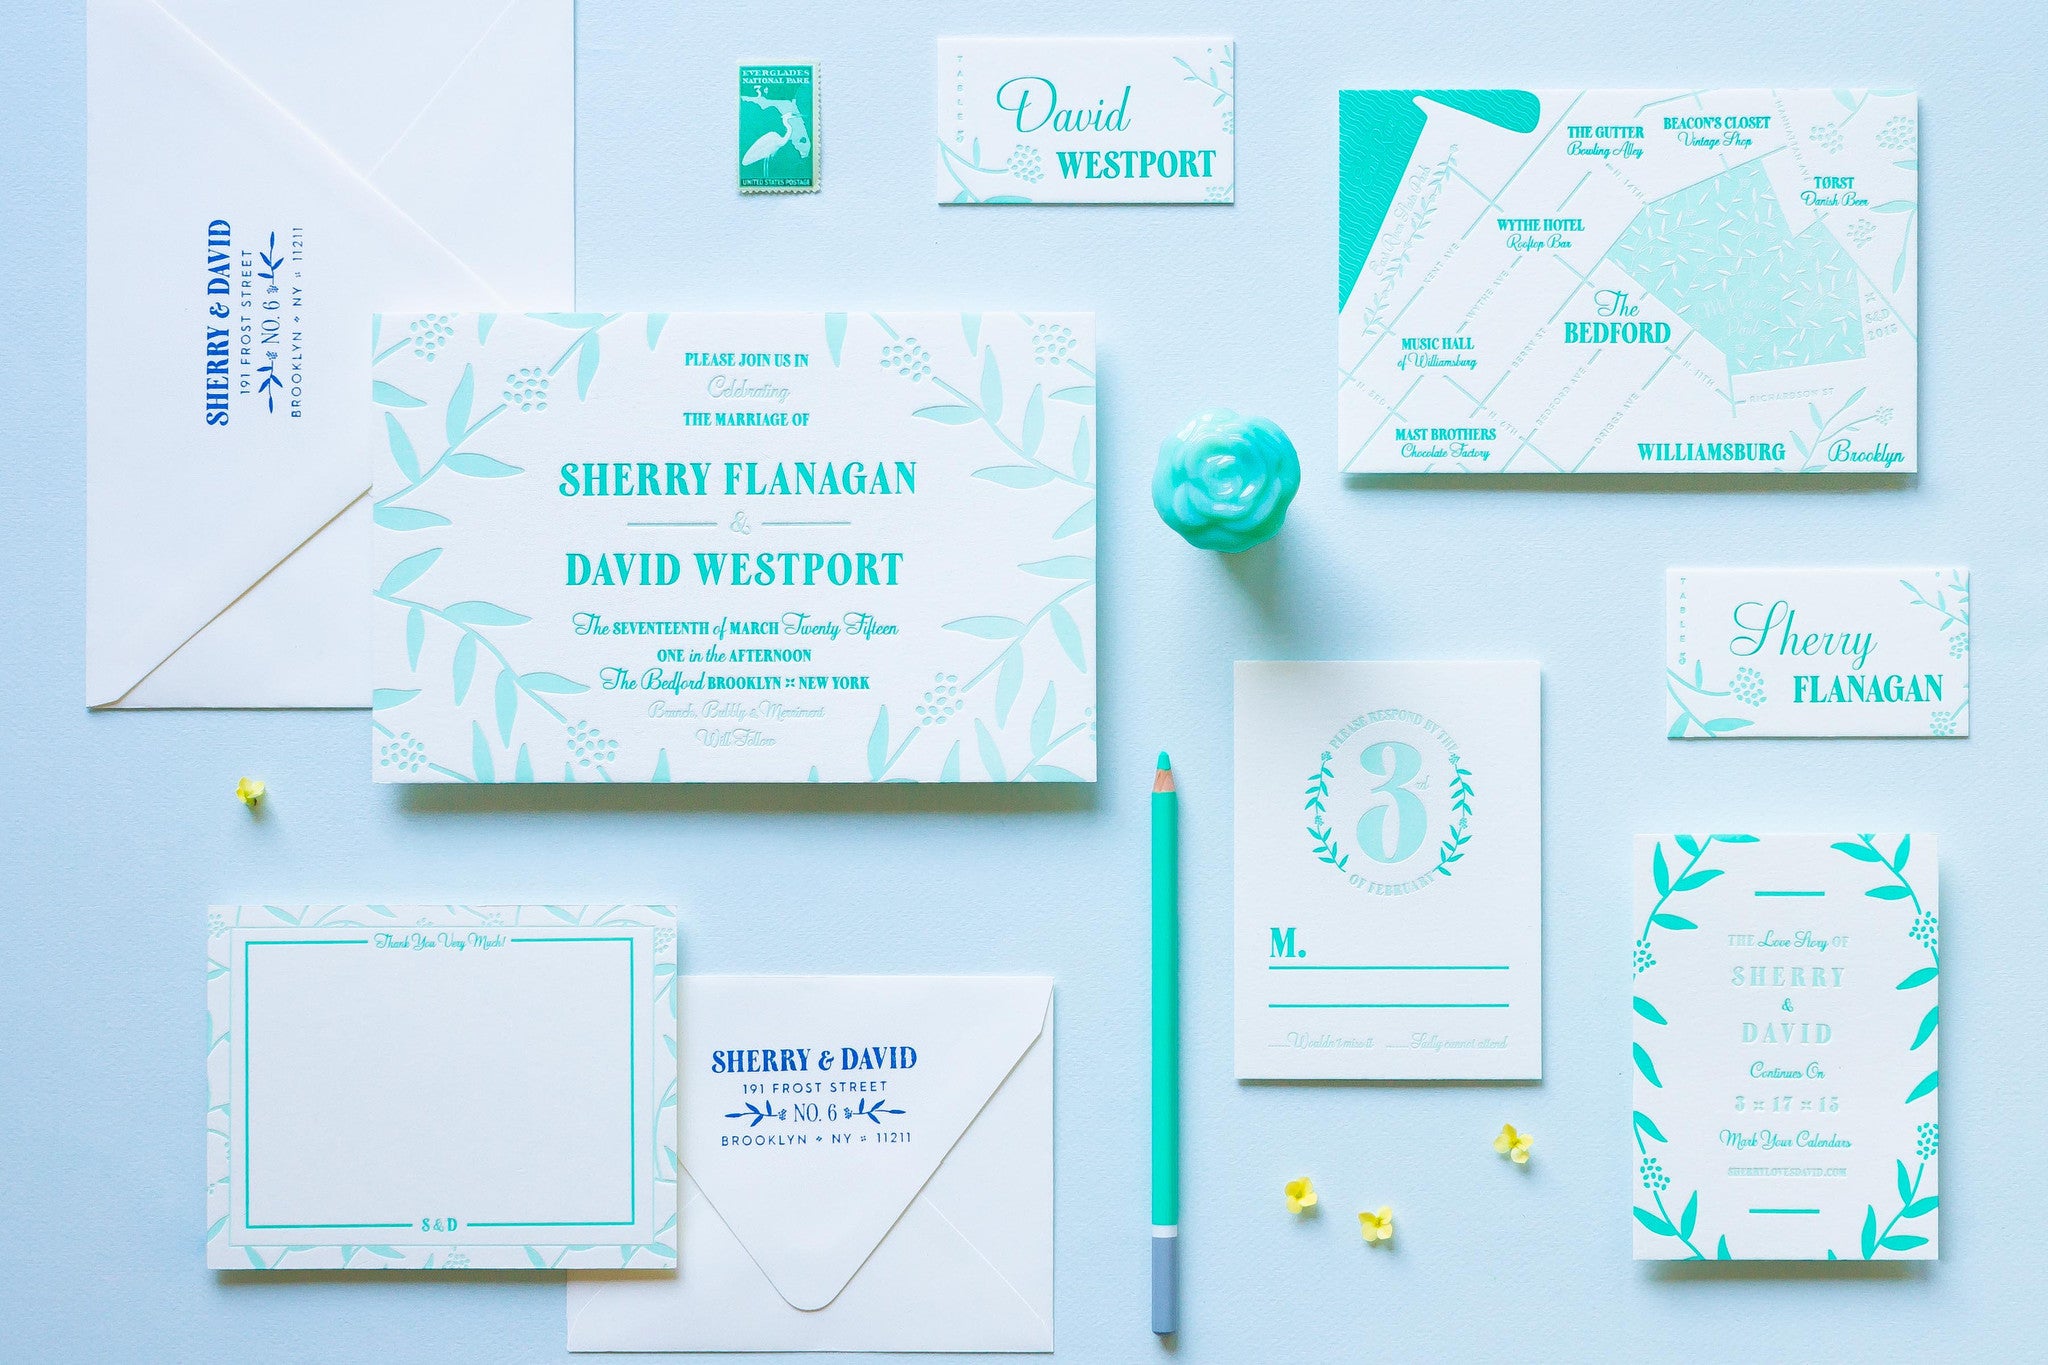 Sherry Darlin': Pretty Floral Vines Letterpress Wedding Invitation Suite by My Darlin', a Brooklyn, New York design and paper goods studio | www.mydarl.in